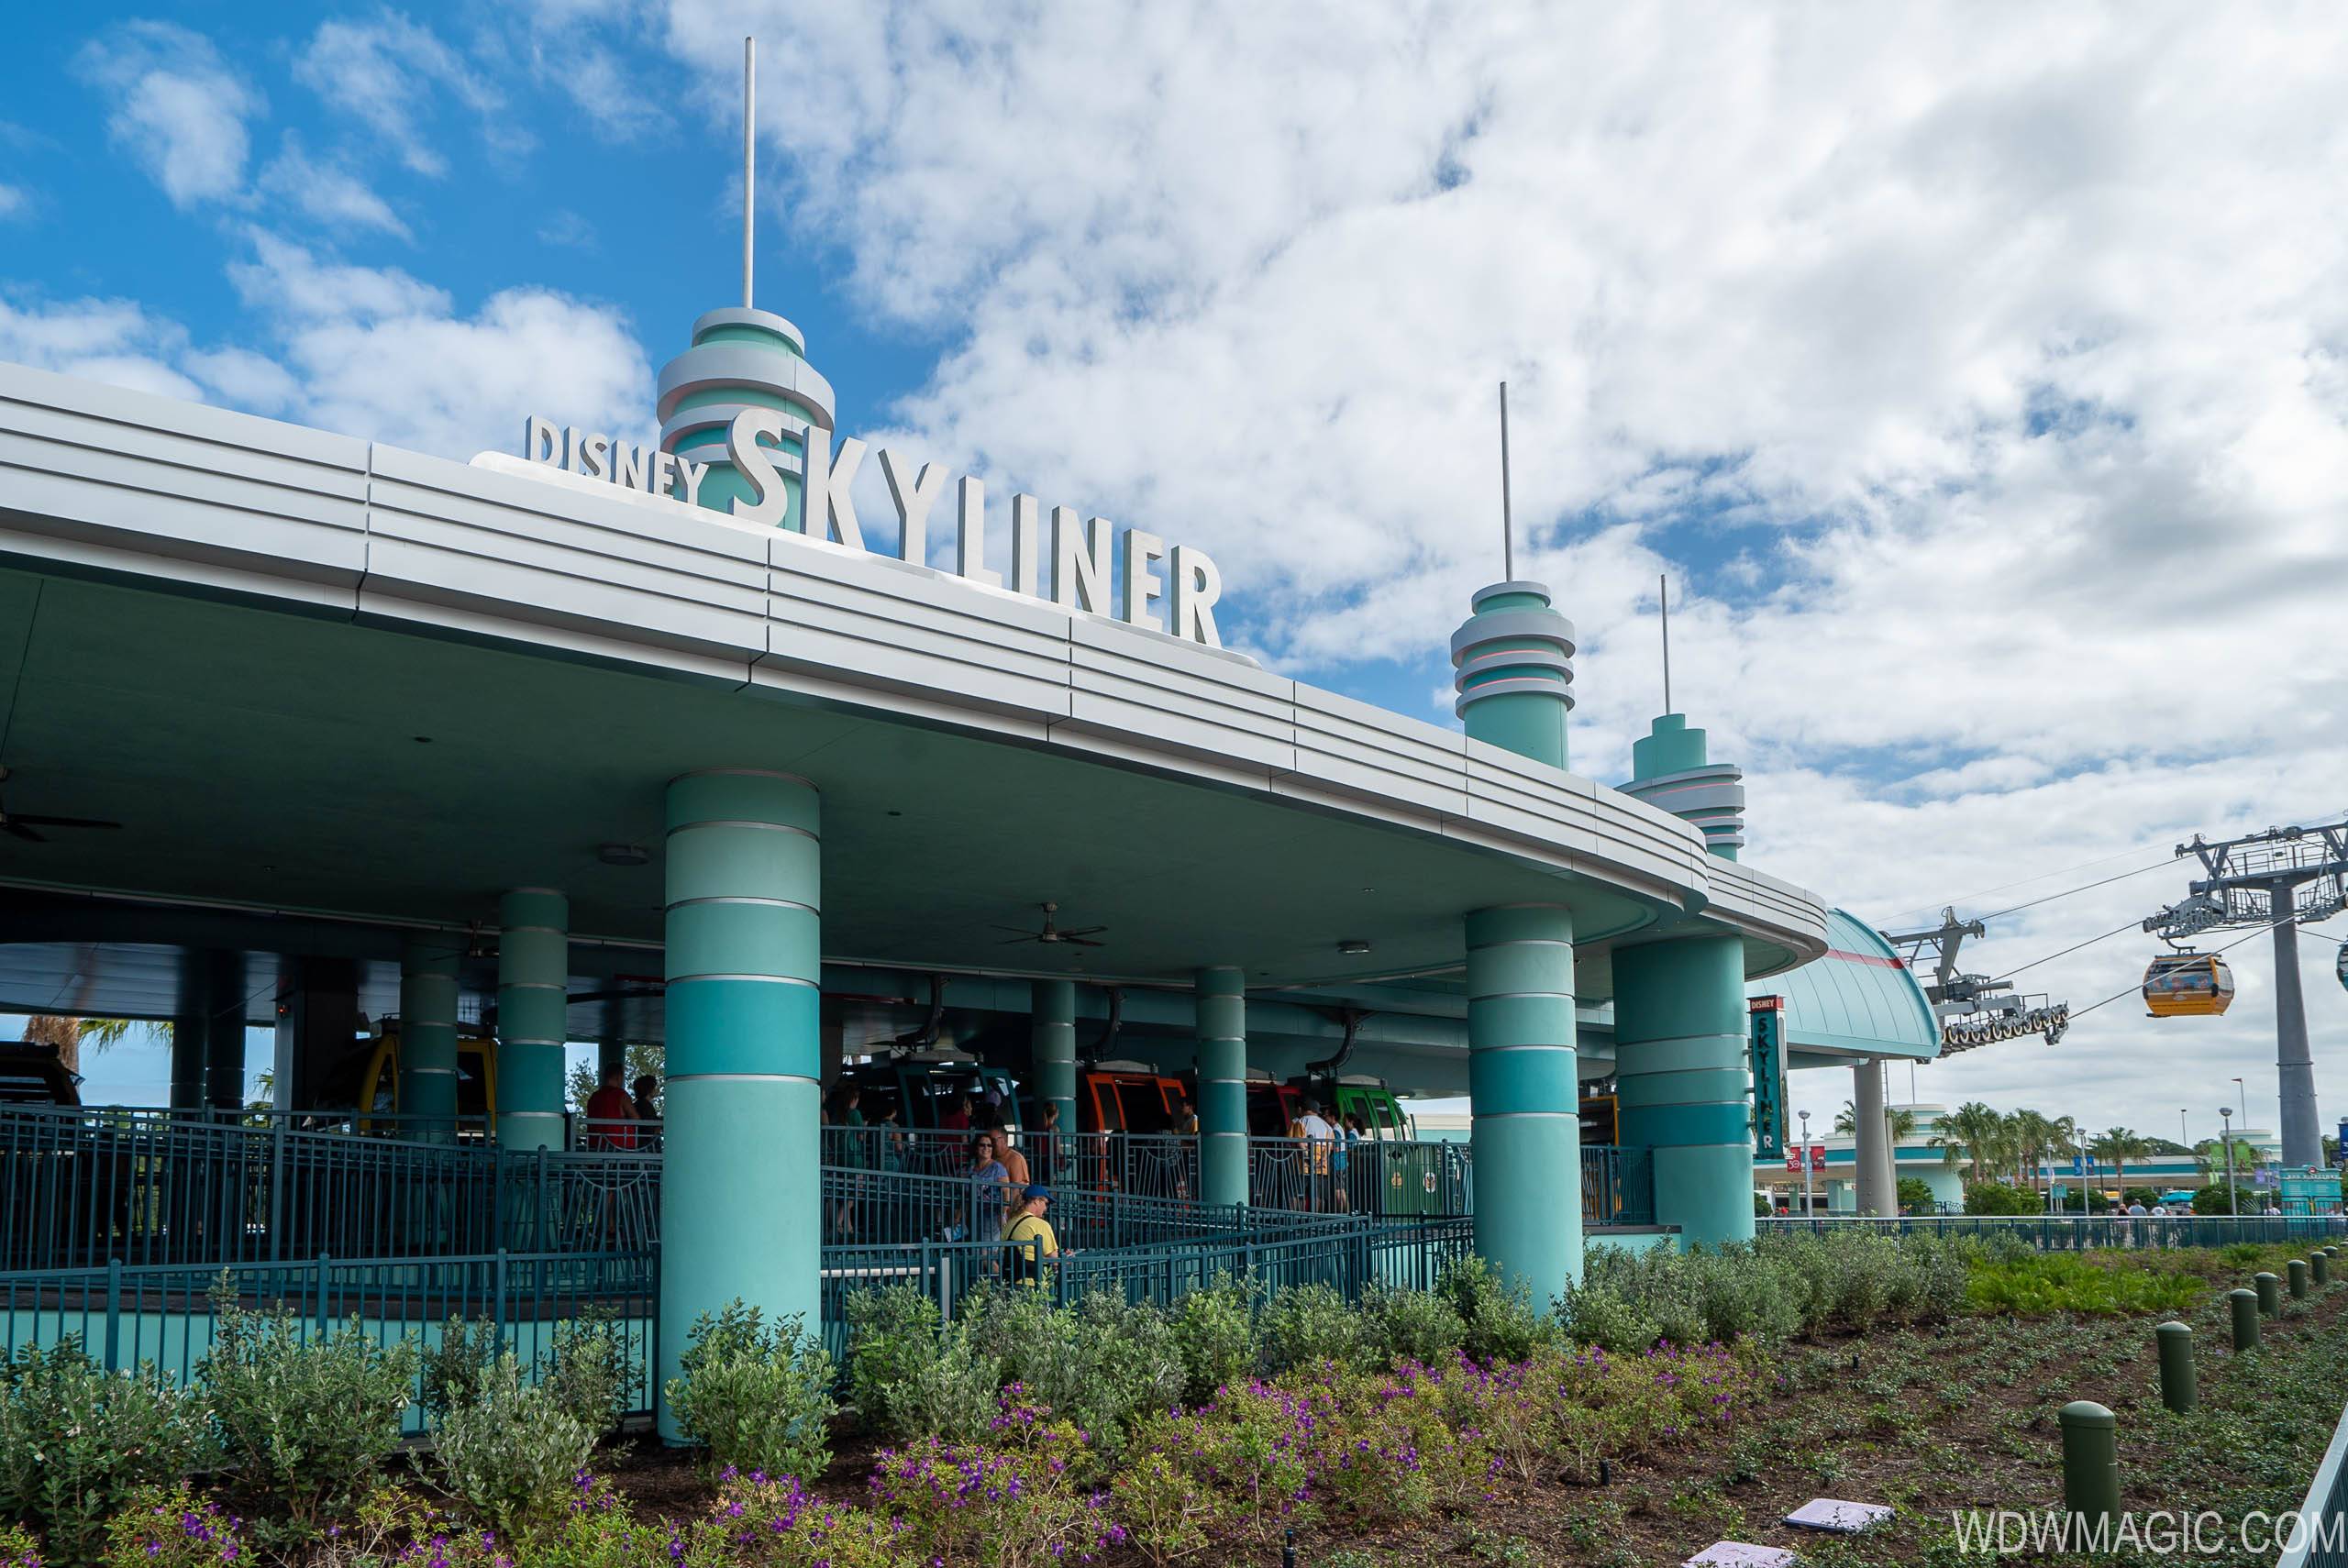 Disney Skyliner now closed for annual refurbishment at Walt Disney World